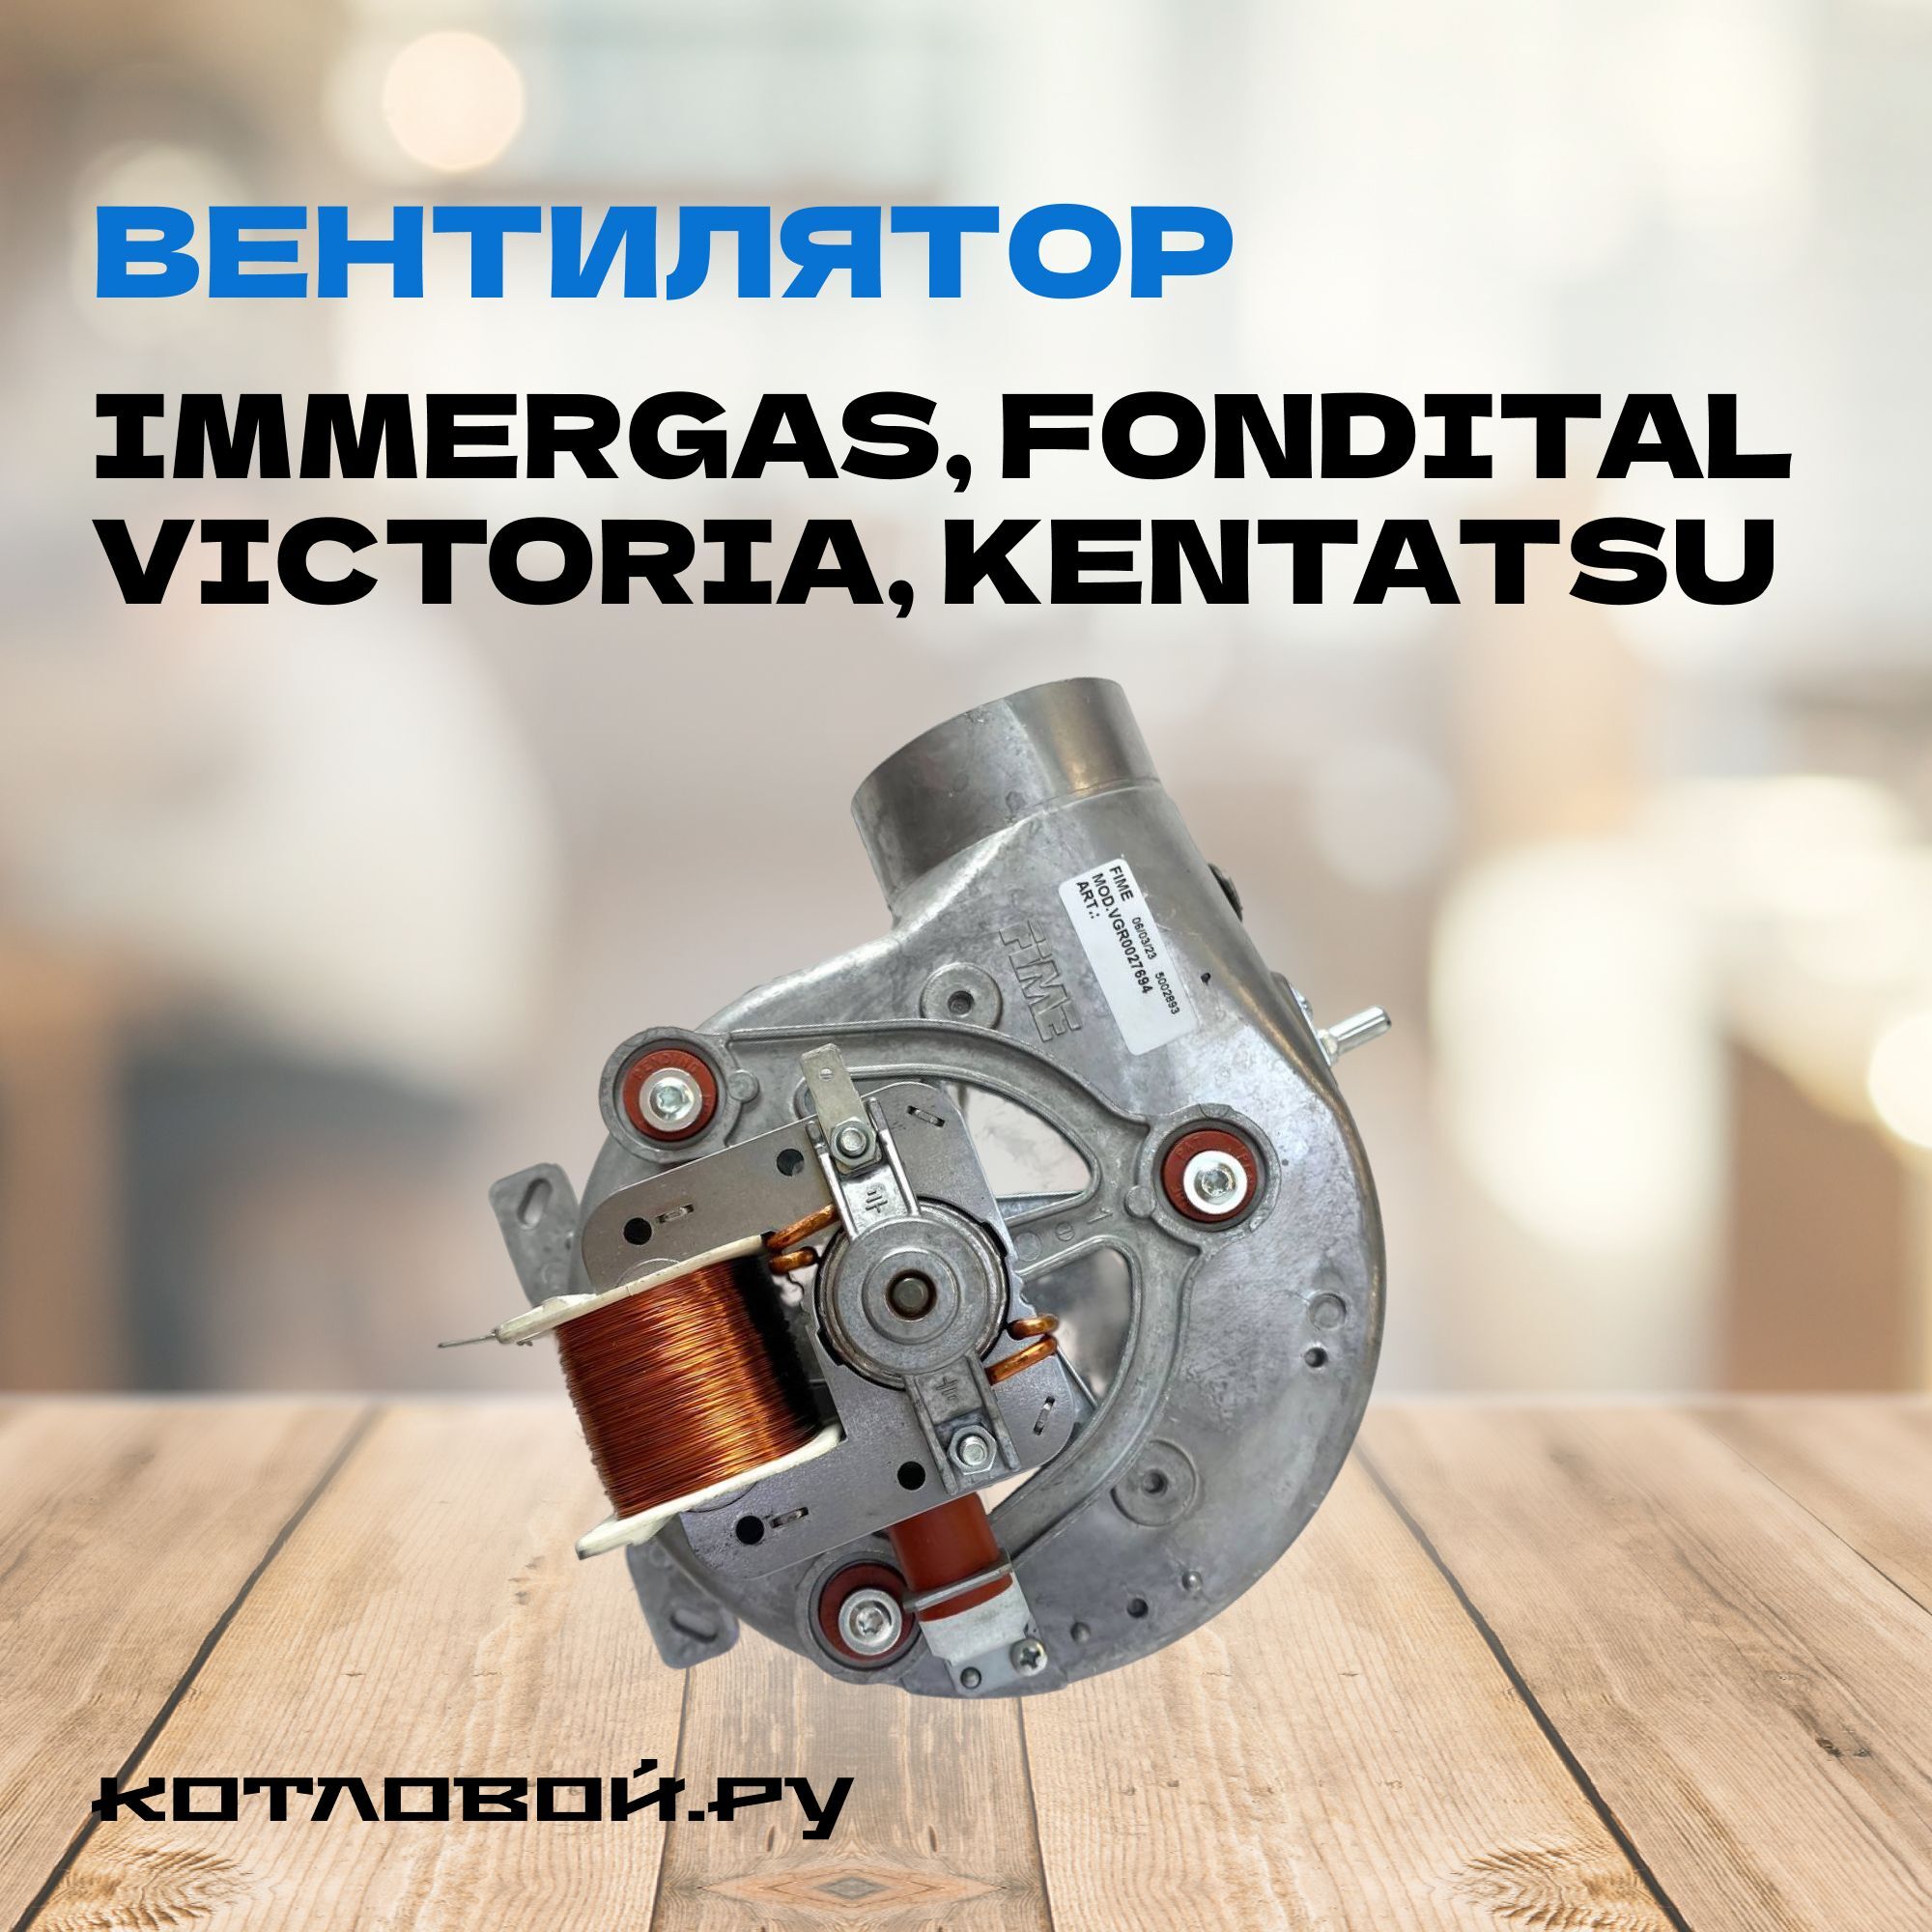 Вентилятор для котлов Immergas, Fondital Victoria, Kentatsu 38 W